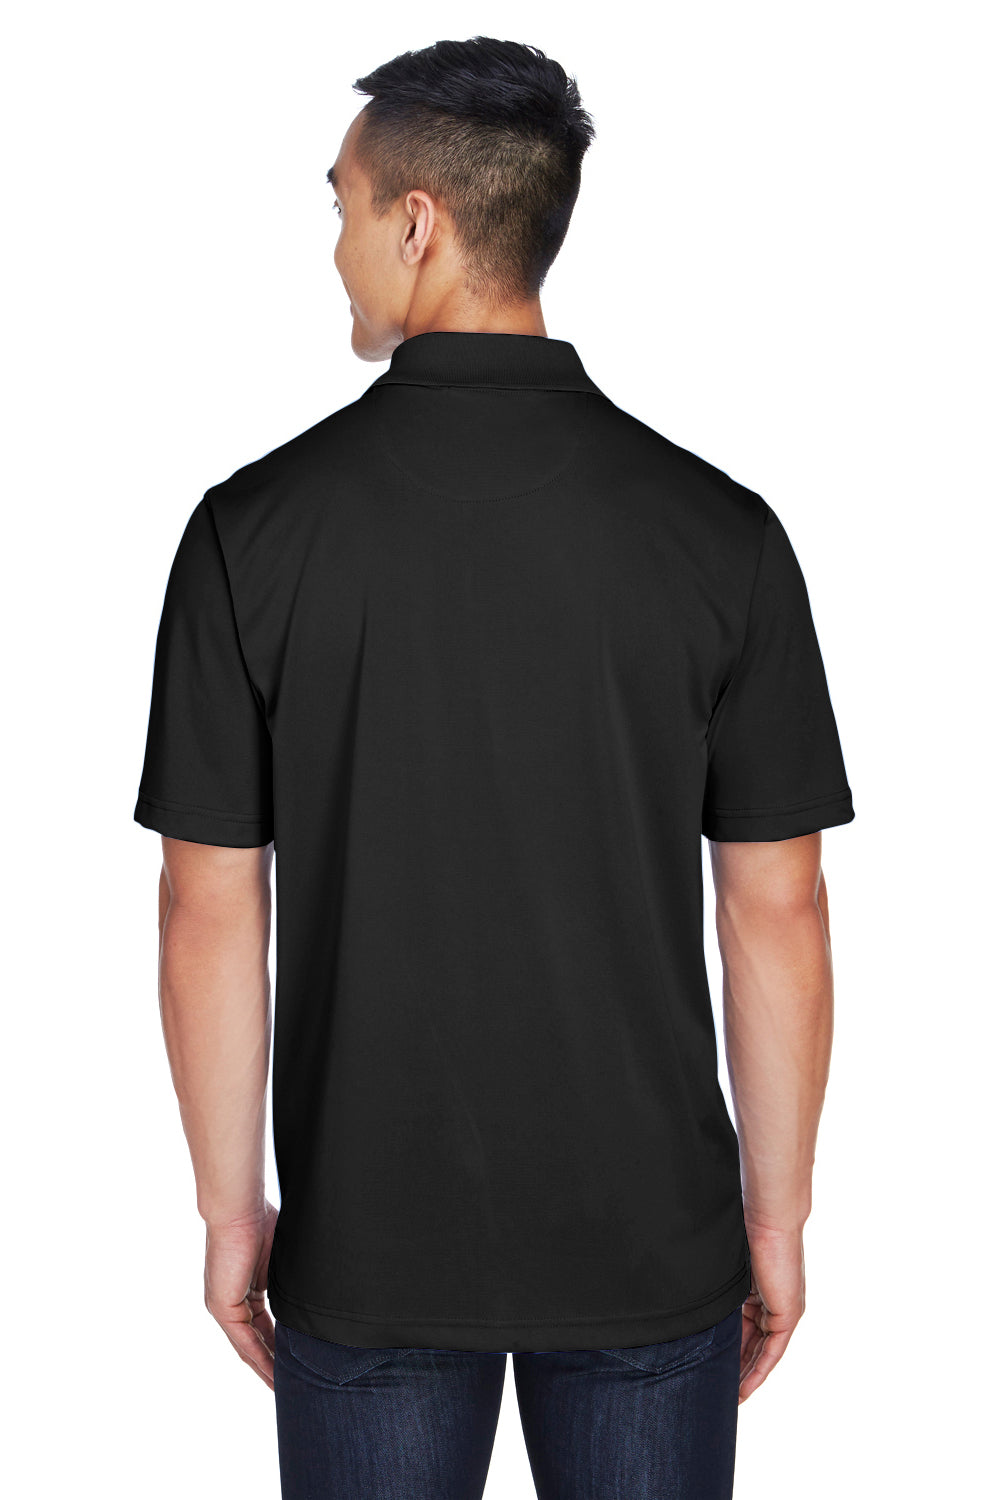 Harriton M345 Mens Advantage Moisture Wicking Short Sleeve Polo Shirt Black Back